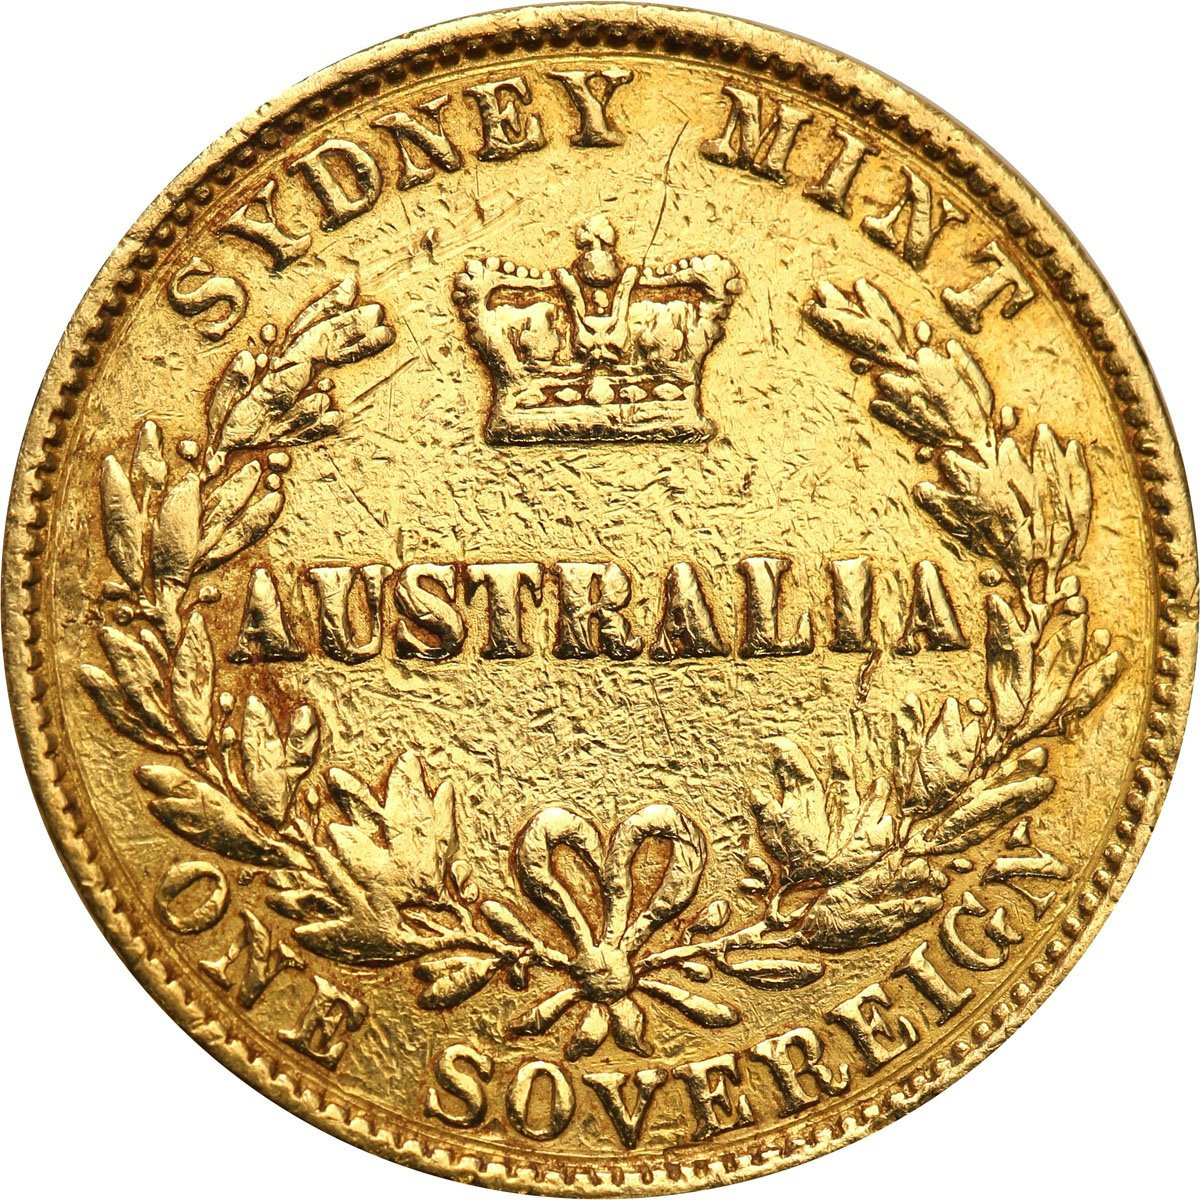 Australia. Victoria Suweren 1867, Sydney – rzadki